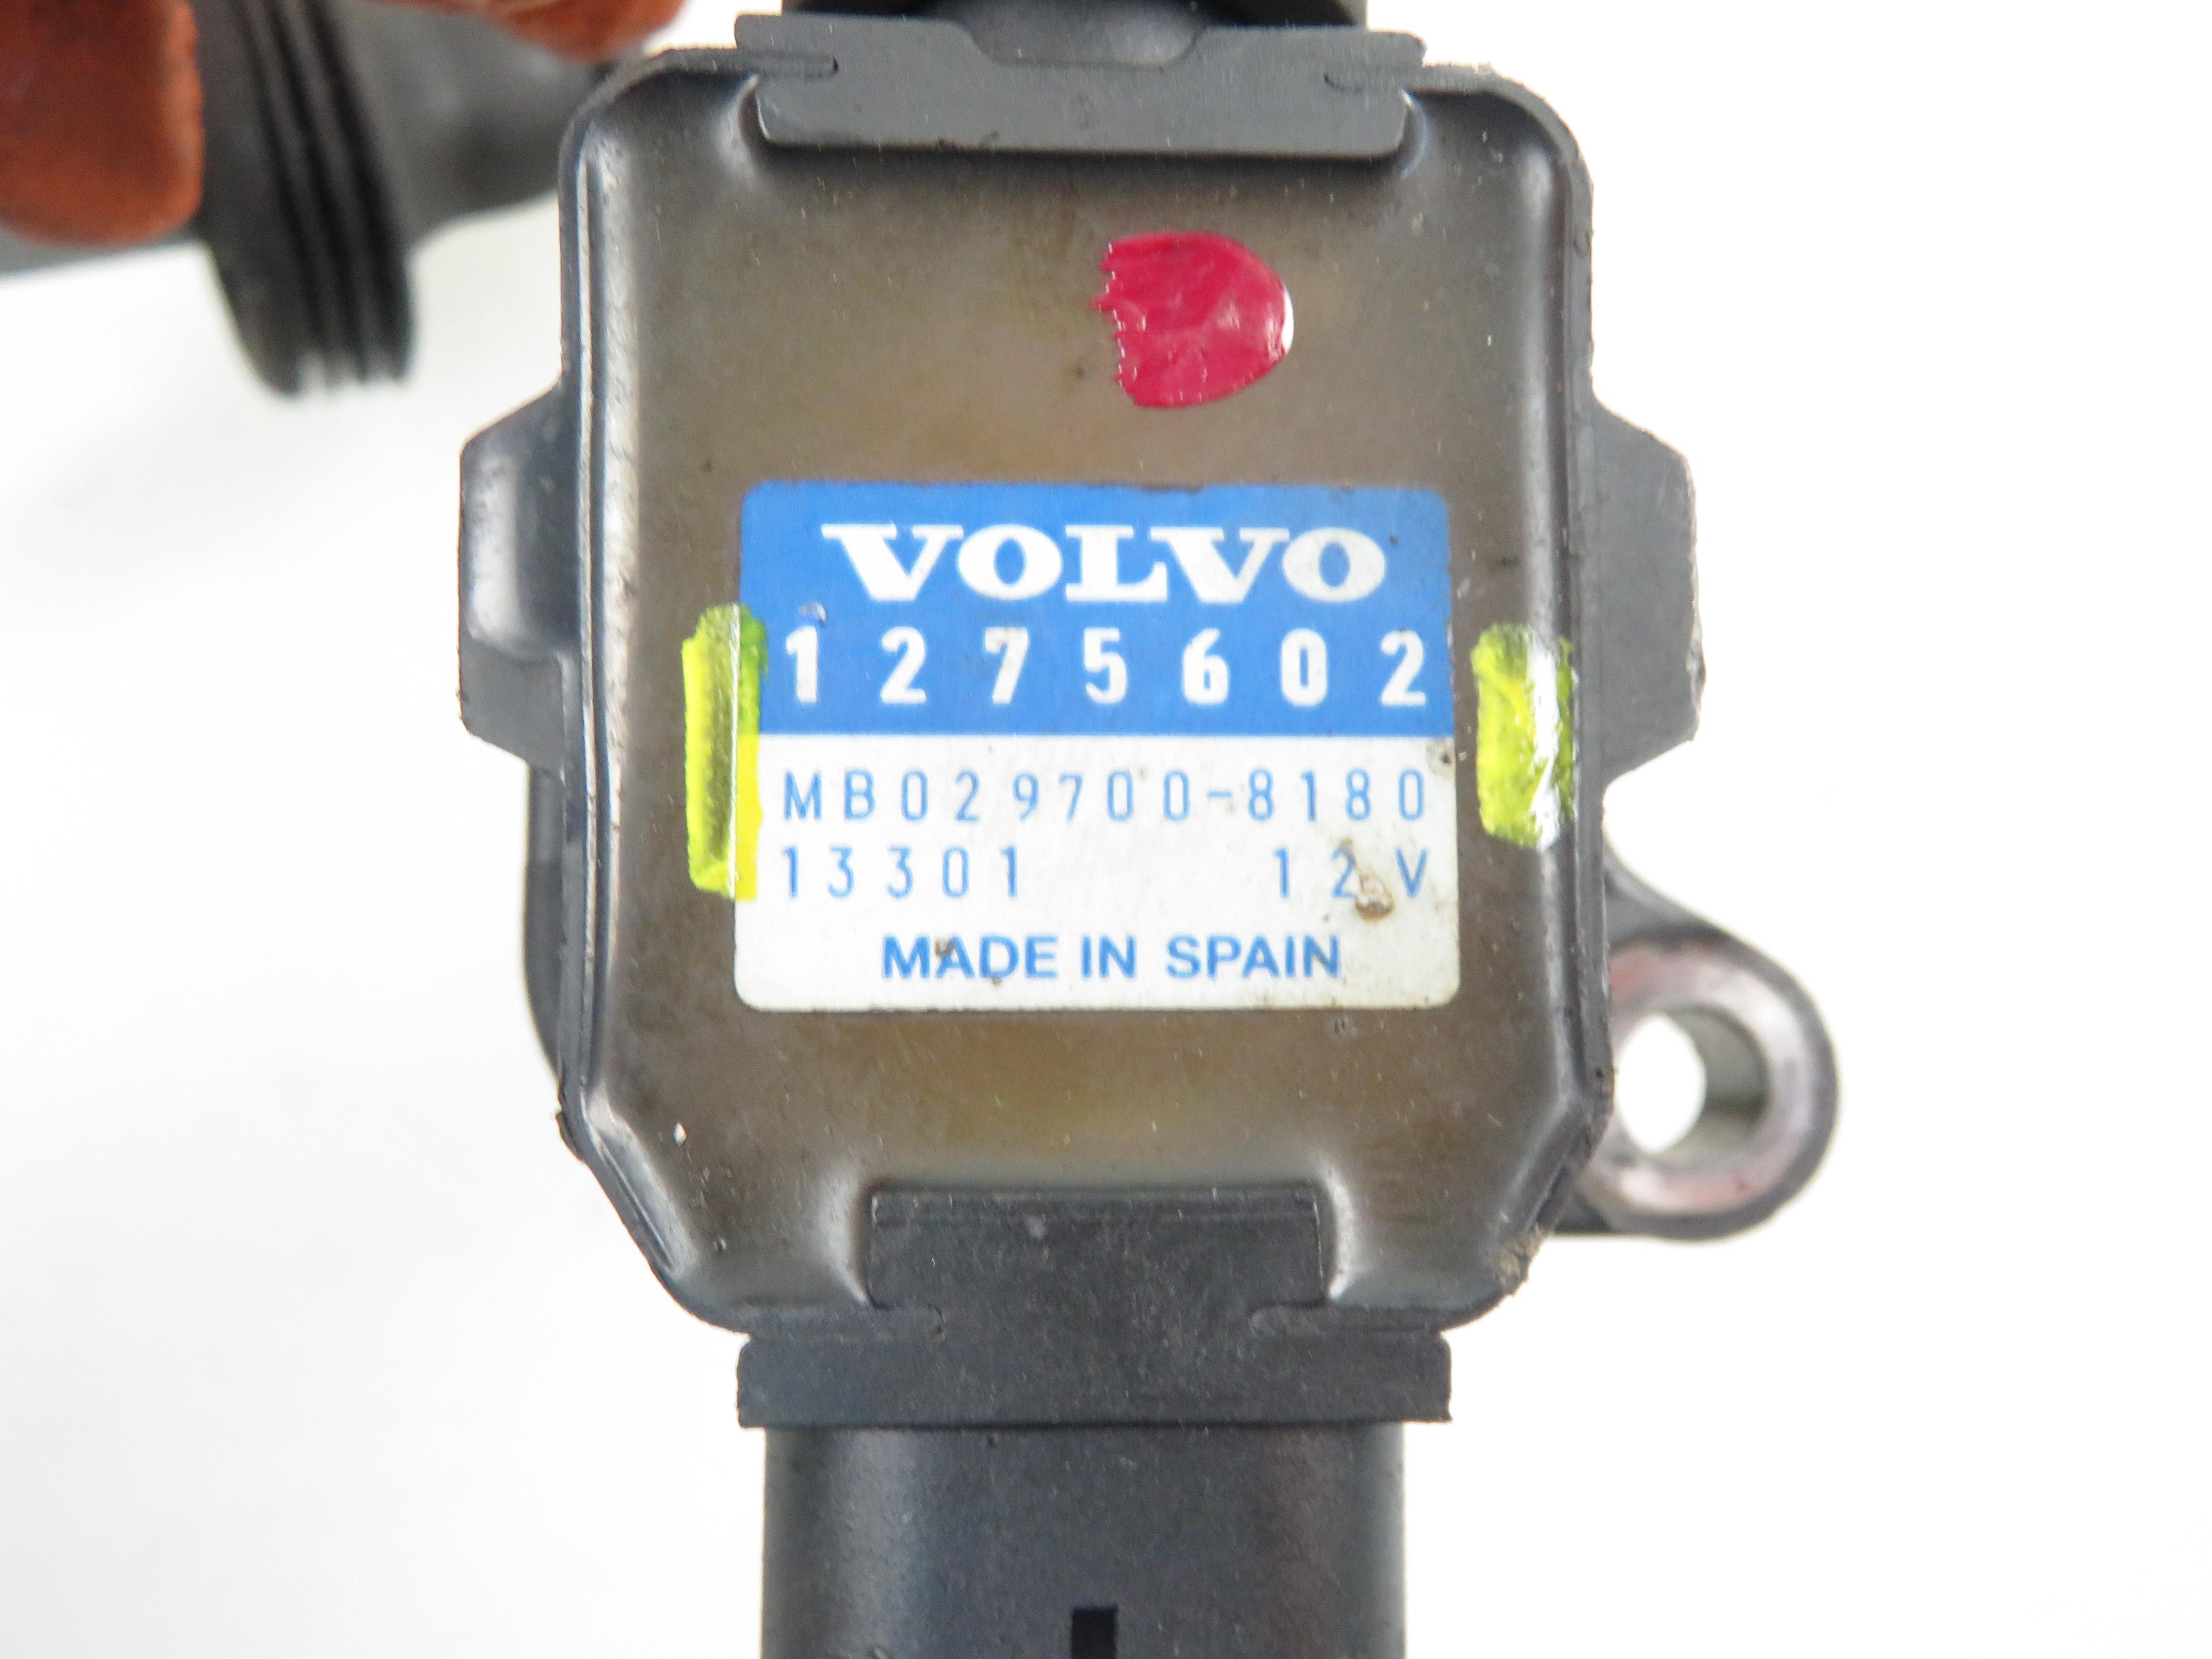 VOLVO V40 1 generation (1996-2004) High Voltage Ignition Coil 1275602, MB0297008180 21232416